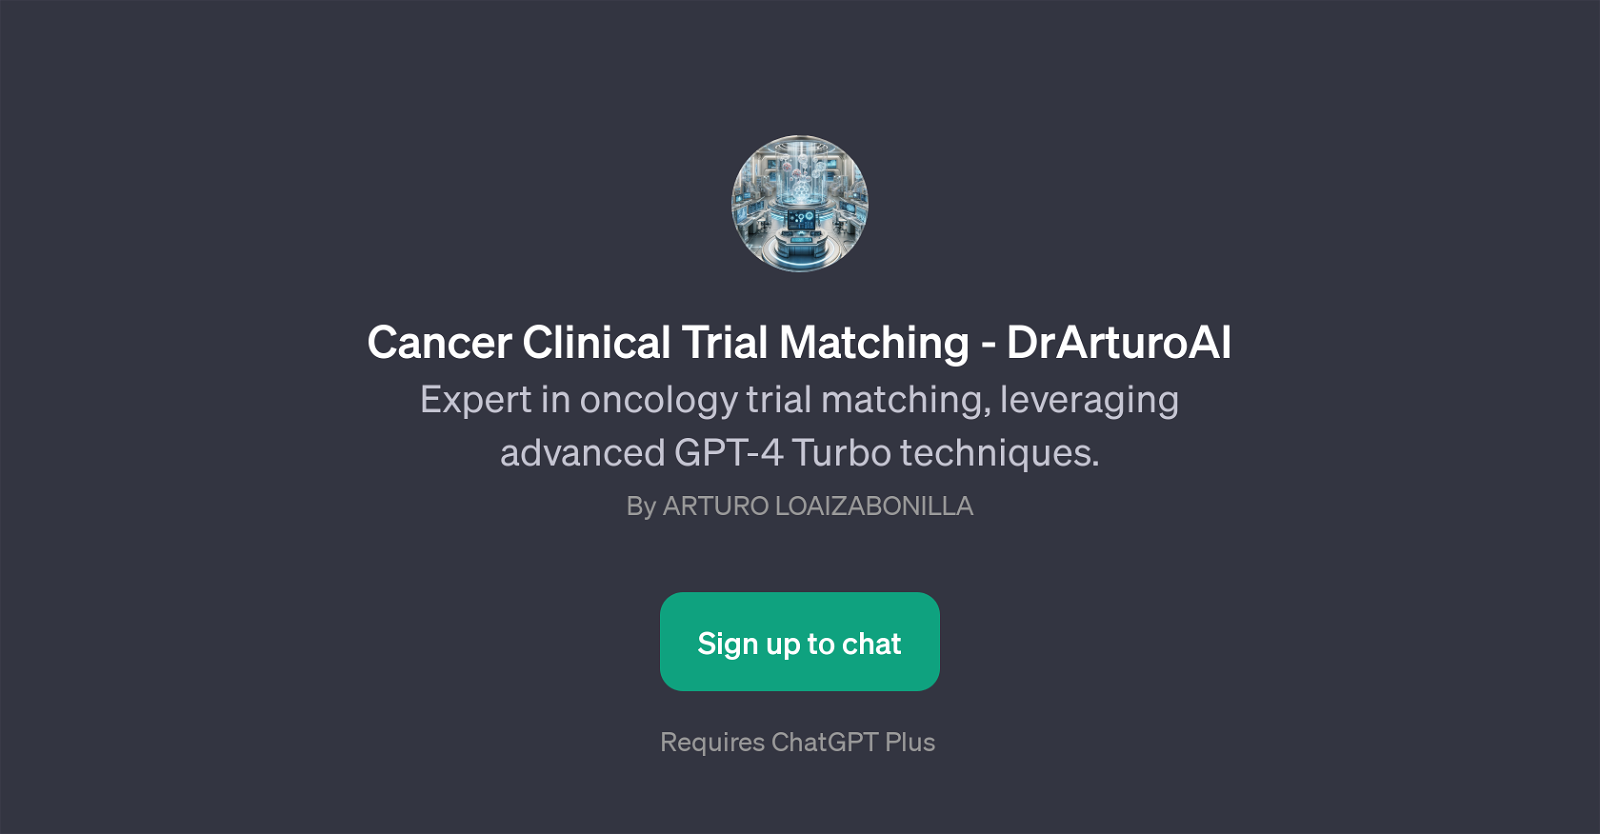 Cancer Clinical Trial Matching - DrArturoAI website